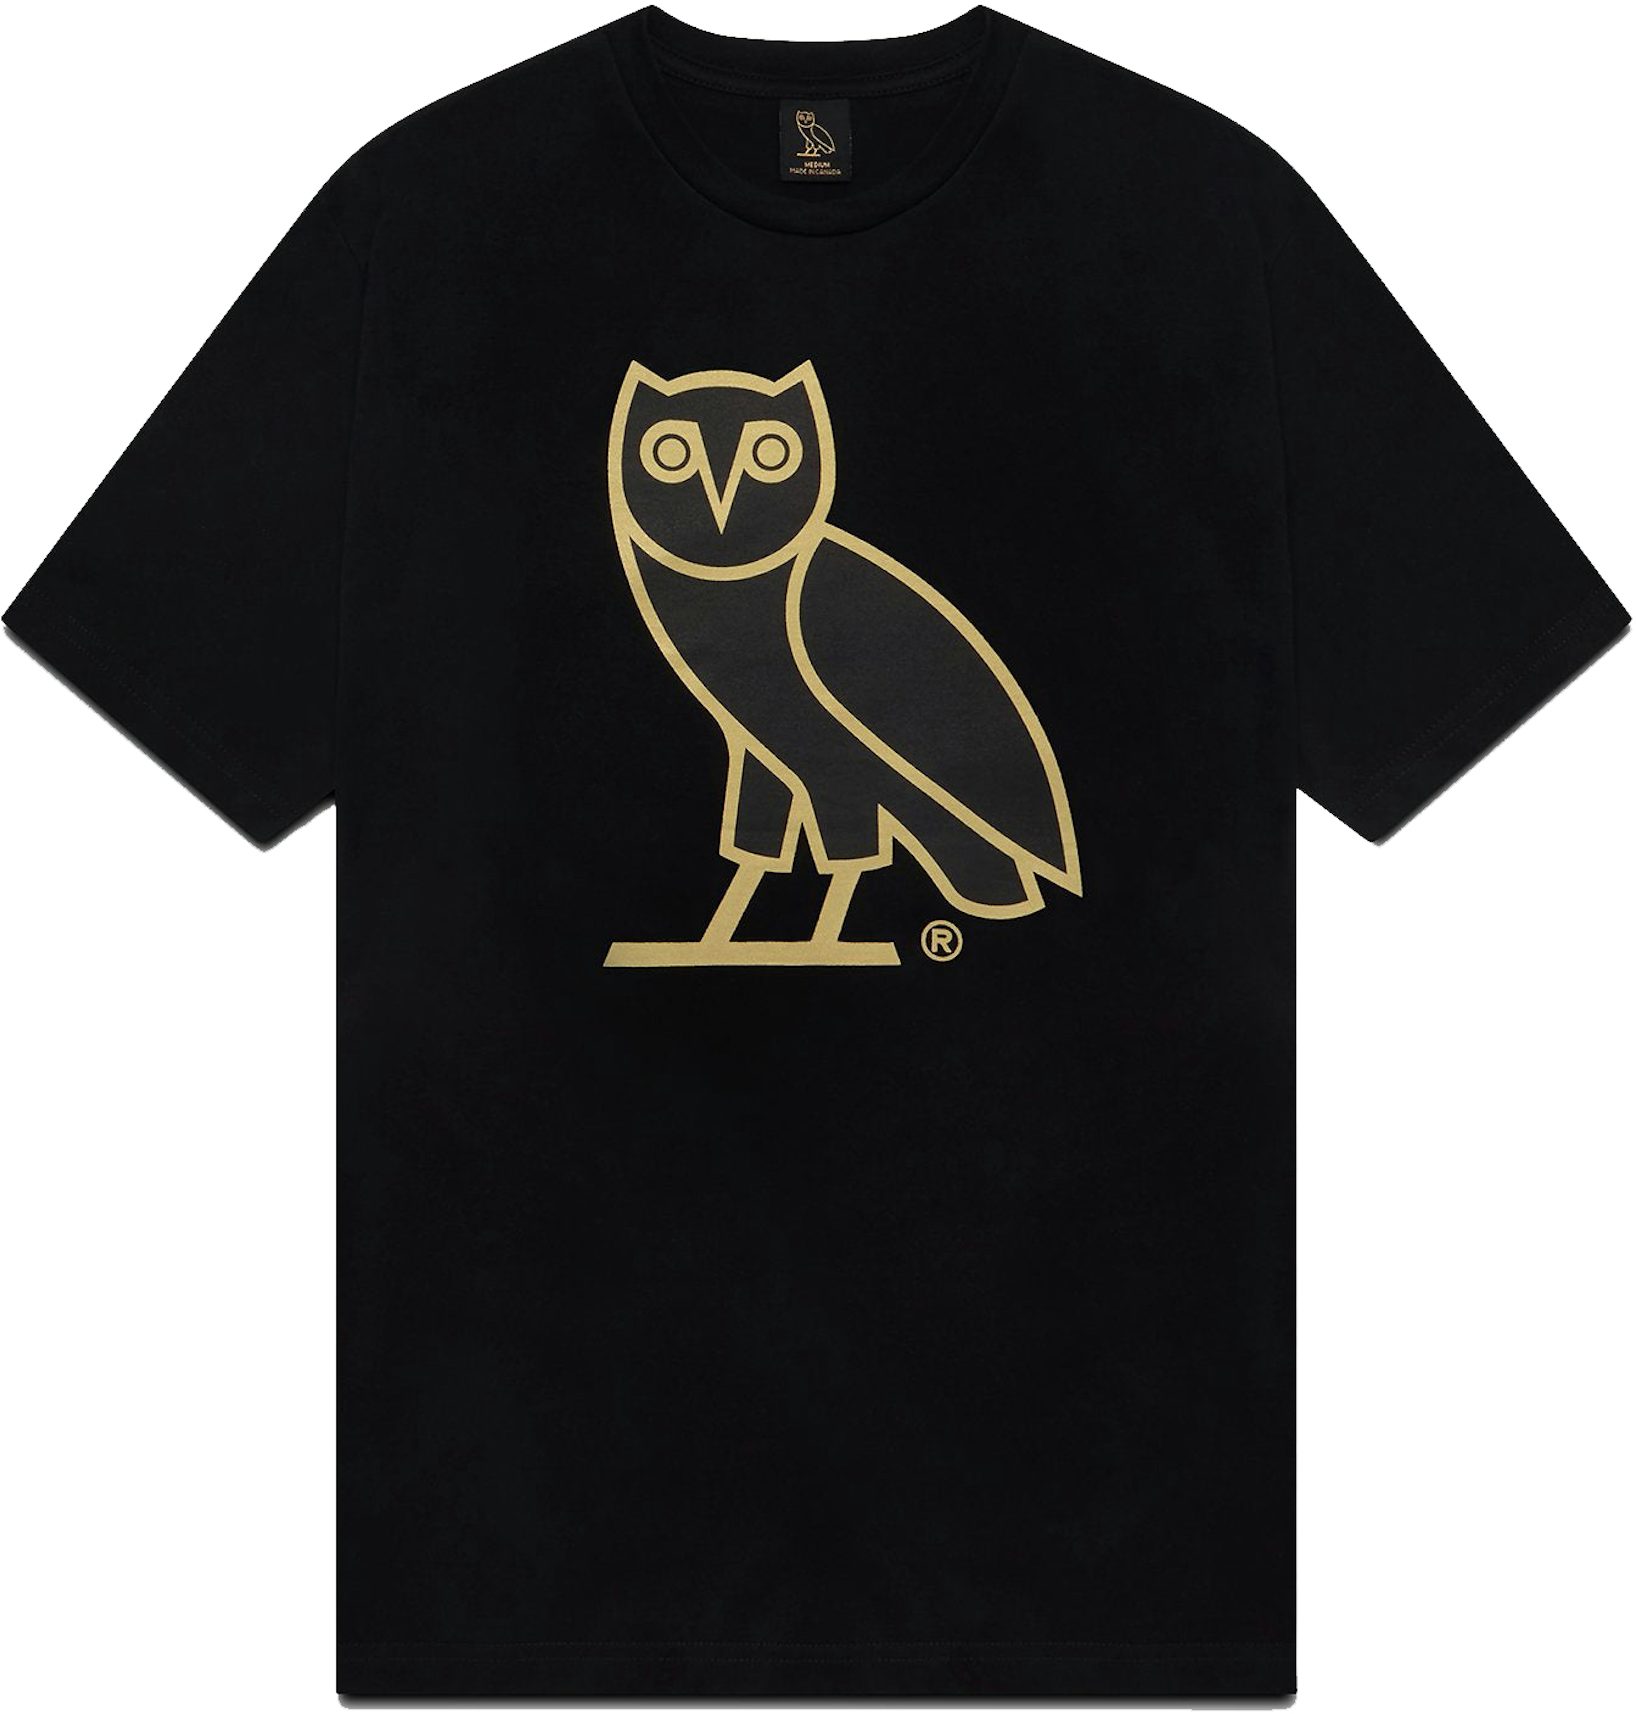 Louis Vuitton big golden label PREMIUM POLO SHIRT - Owl Fashion Shop